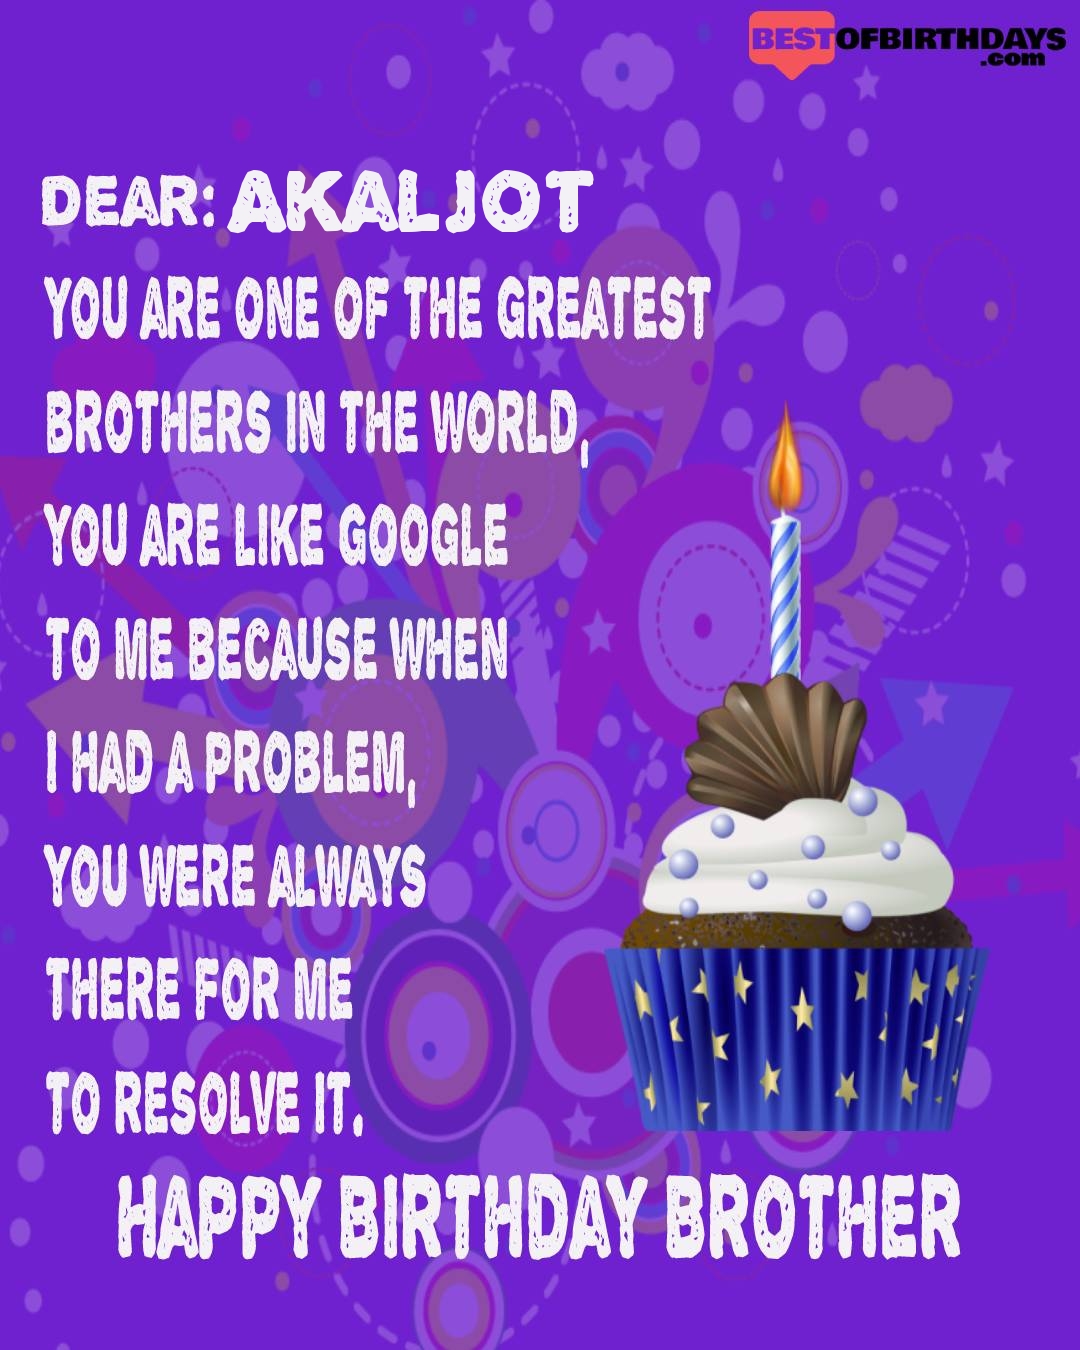 Happy birthday akaljot bhai brother bro